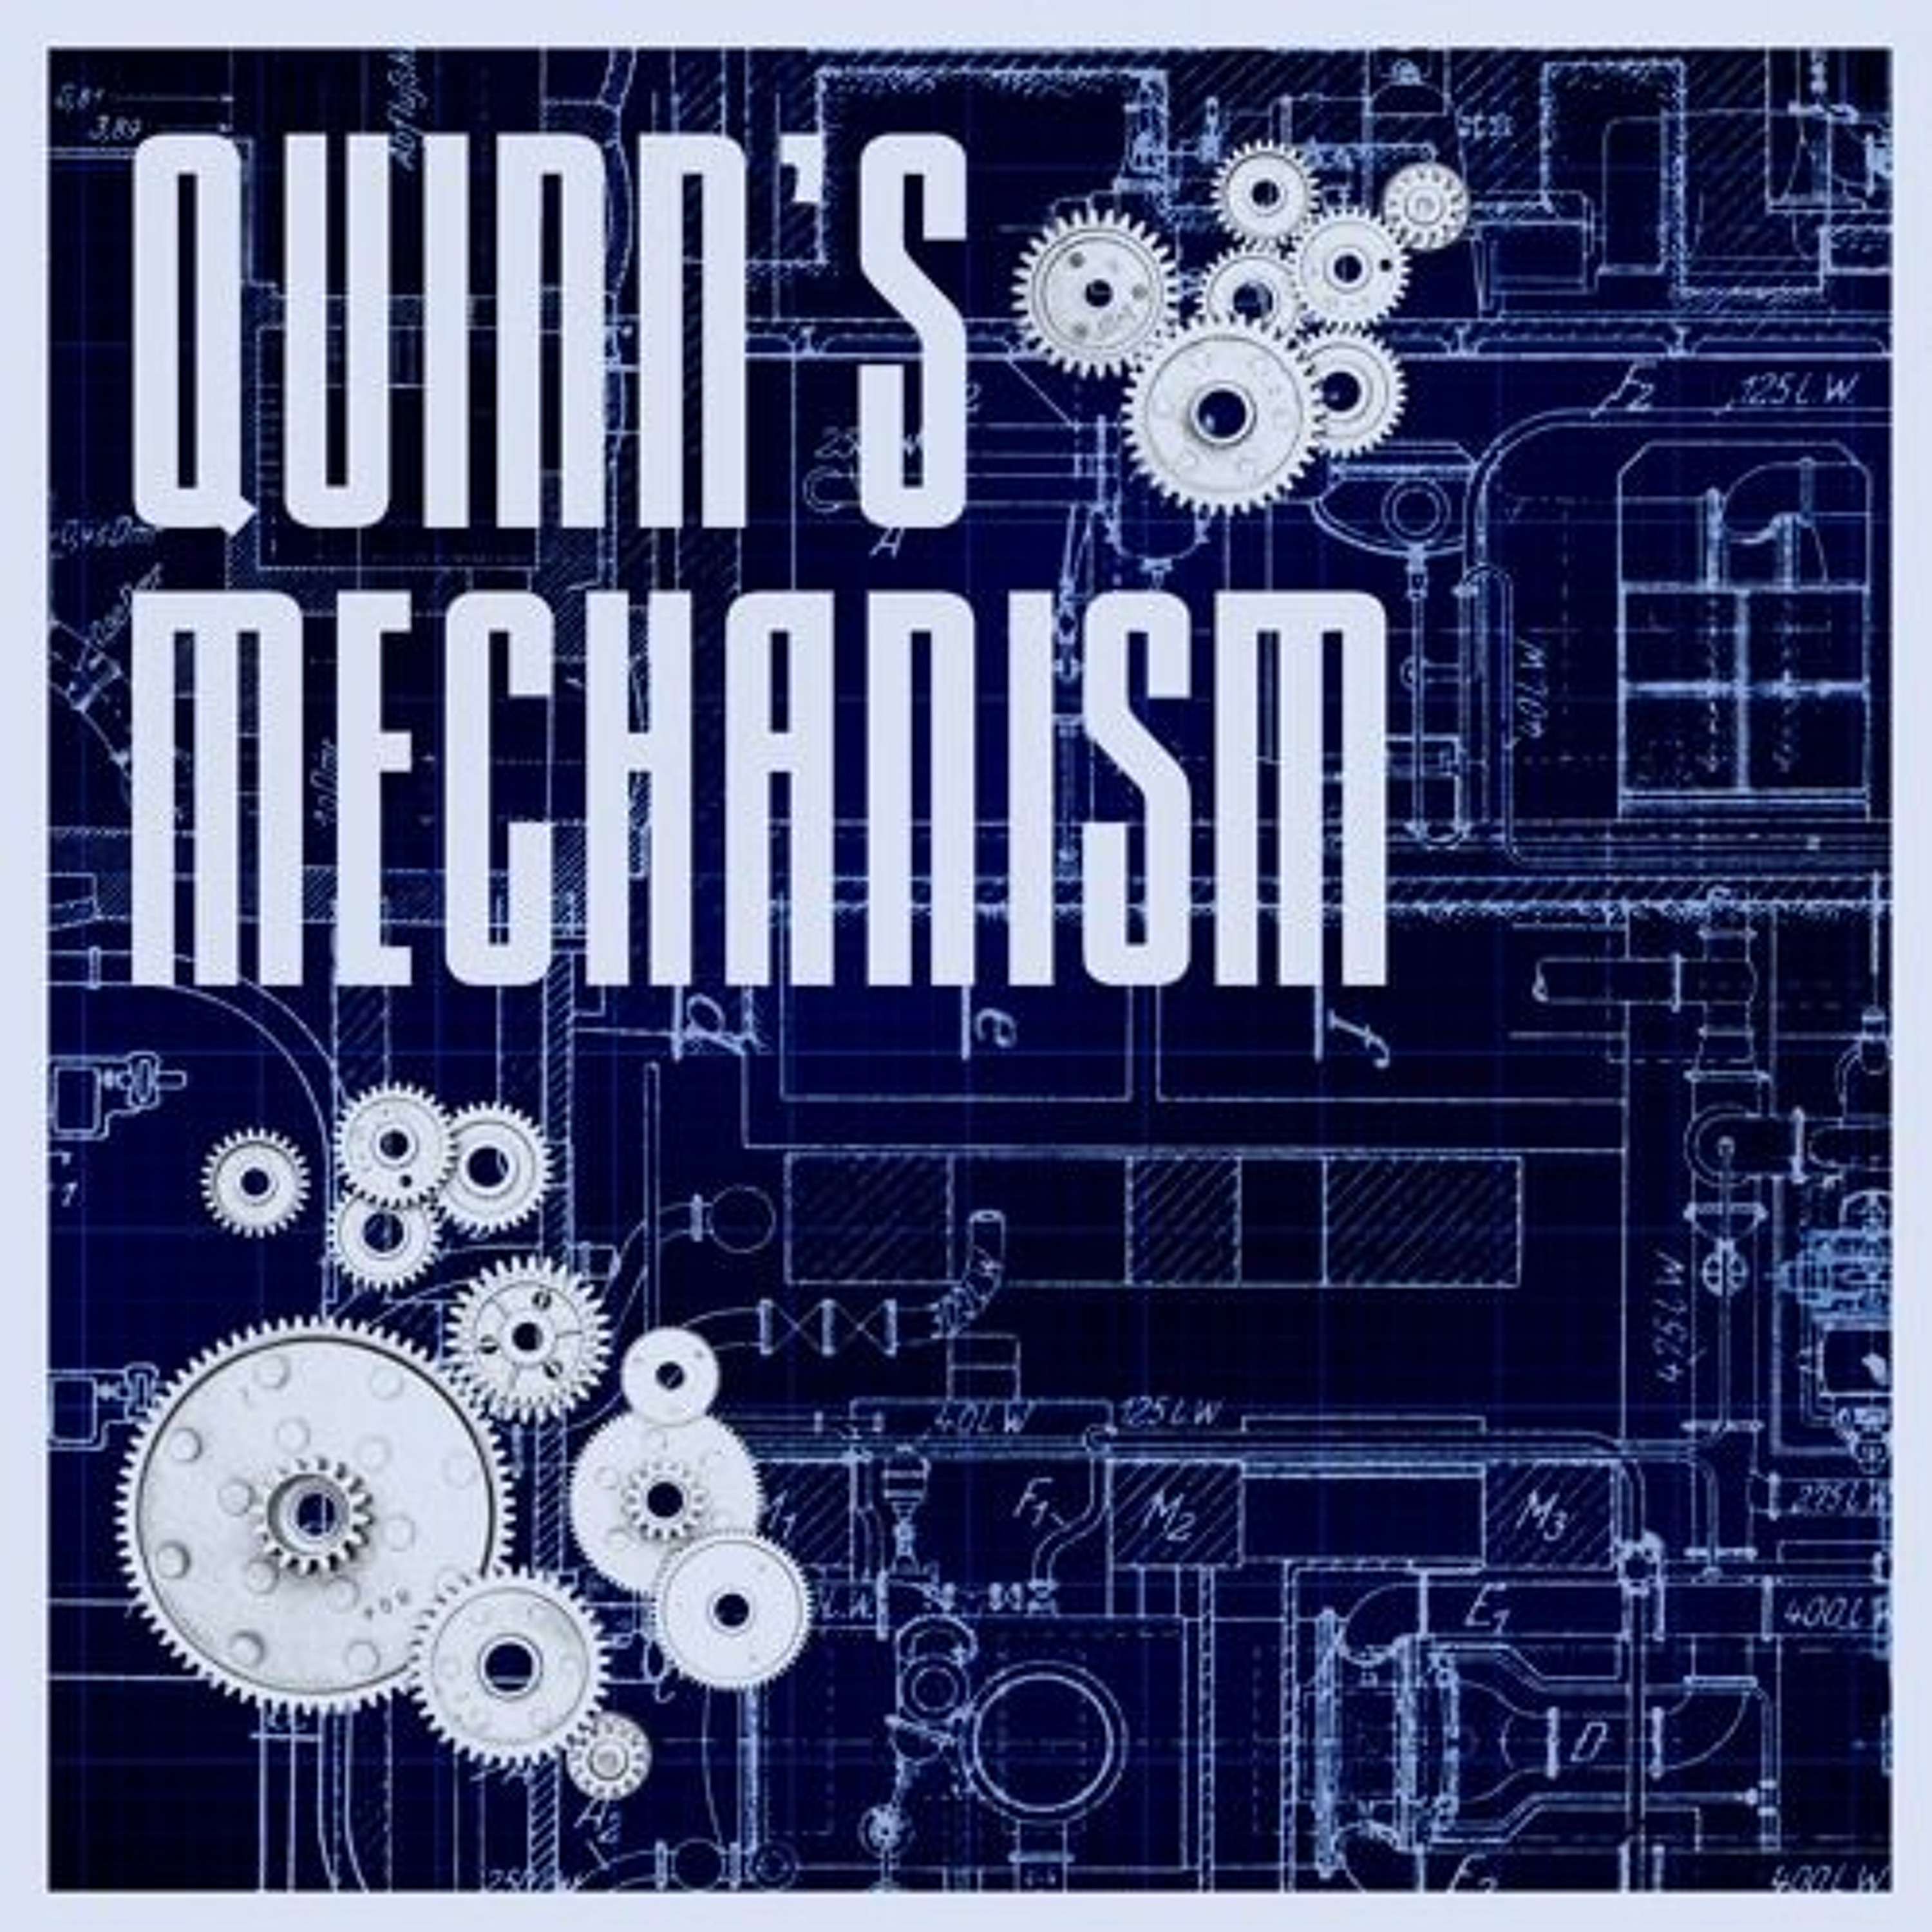 Quinn's Mechanism - Third Act, The Third Component